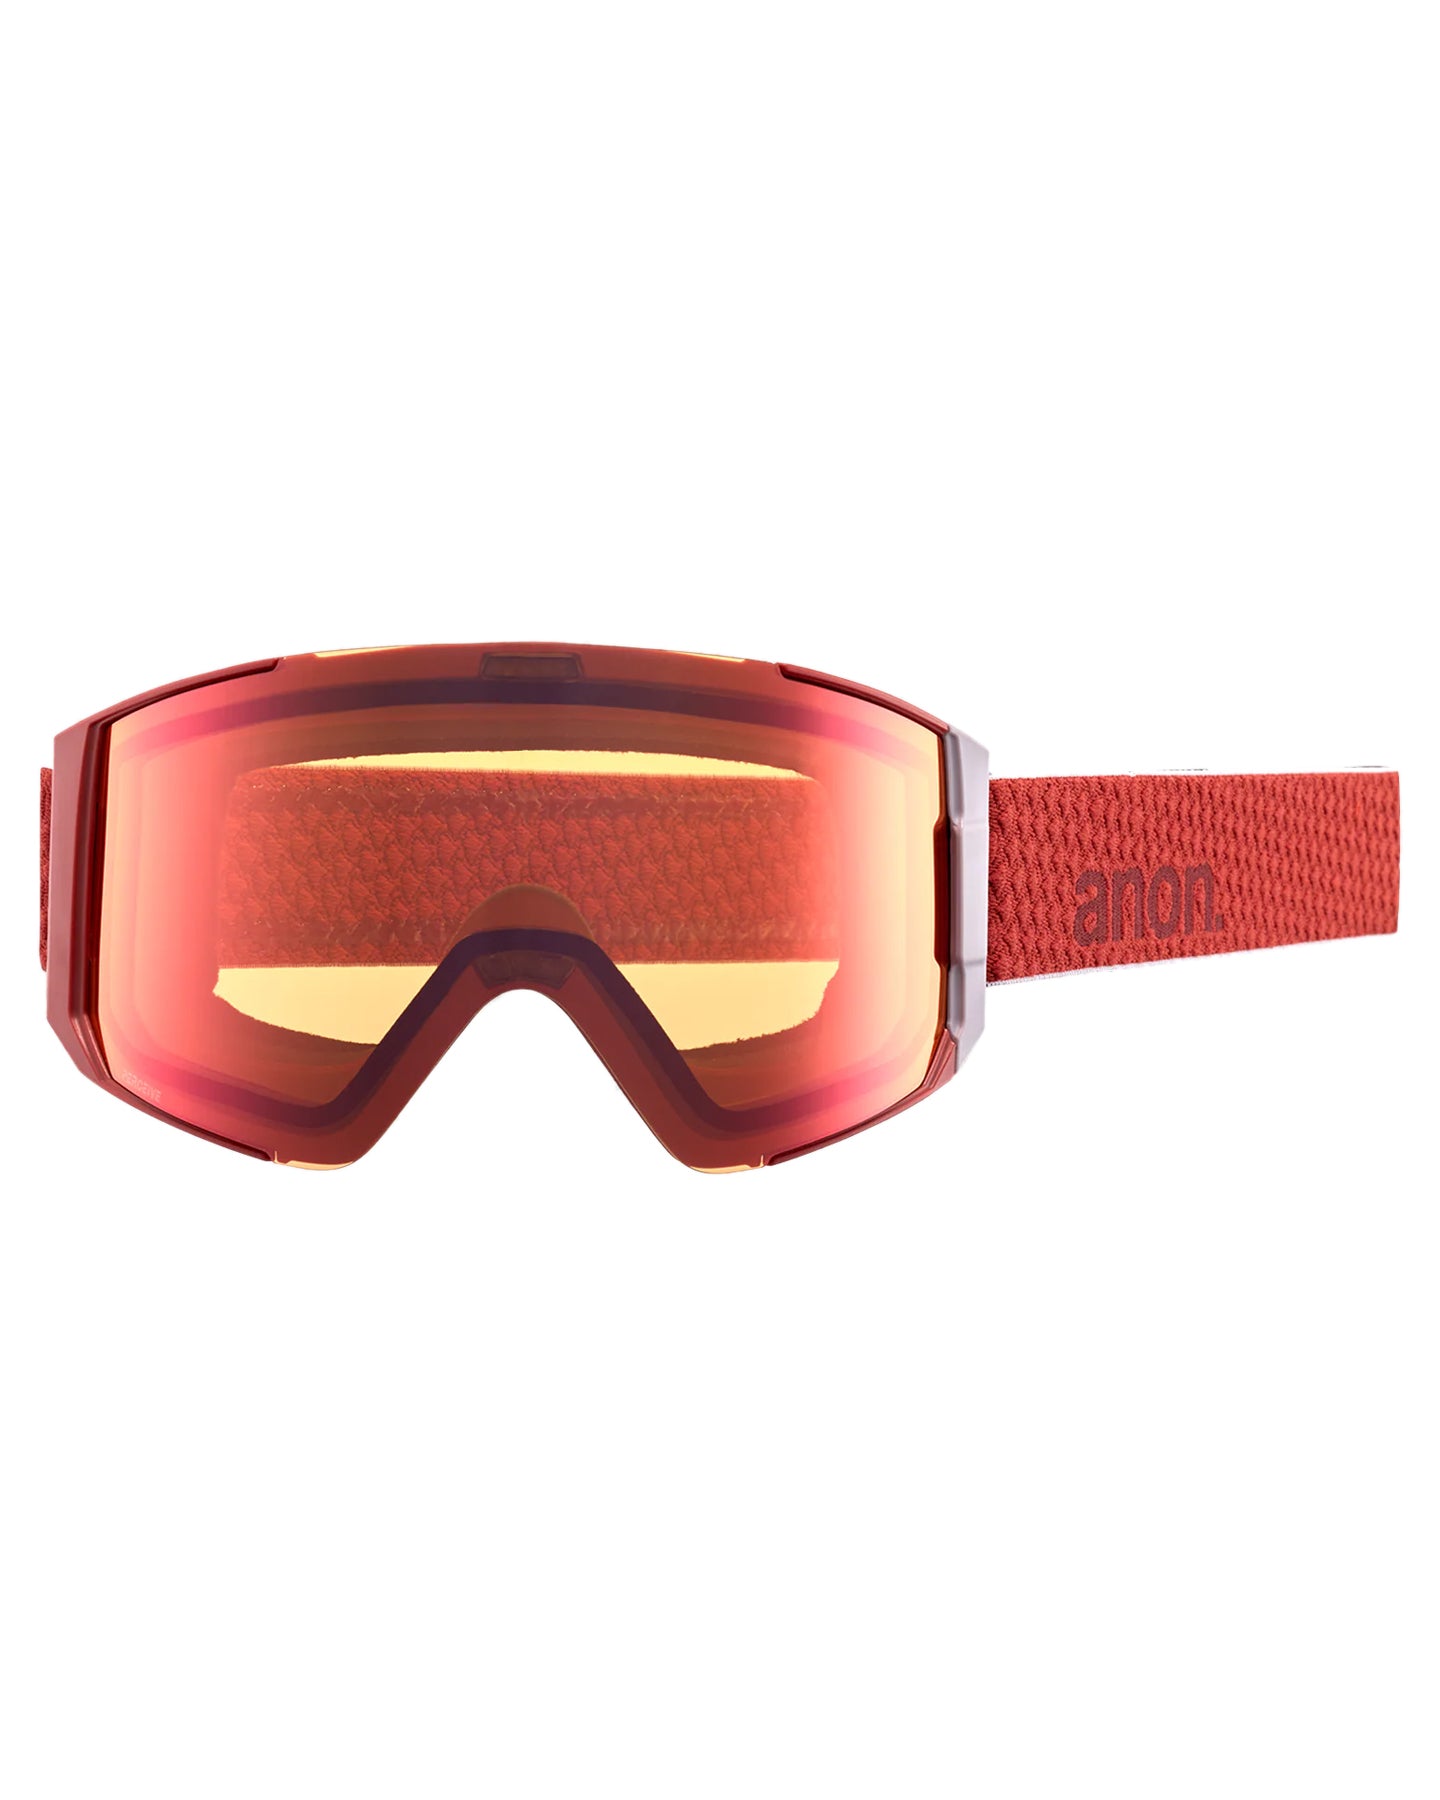 Anon Sync Snow Goggles + Bonus Lens - Mars/Perceive Sunny Red Lens Snow Goggles - Mens - Trojan Wake Ski Snow